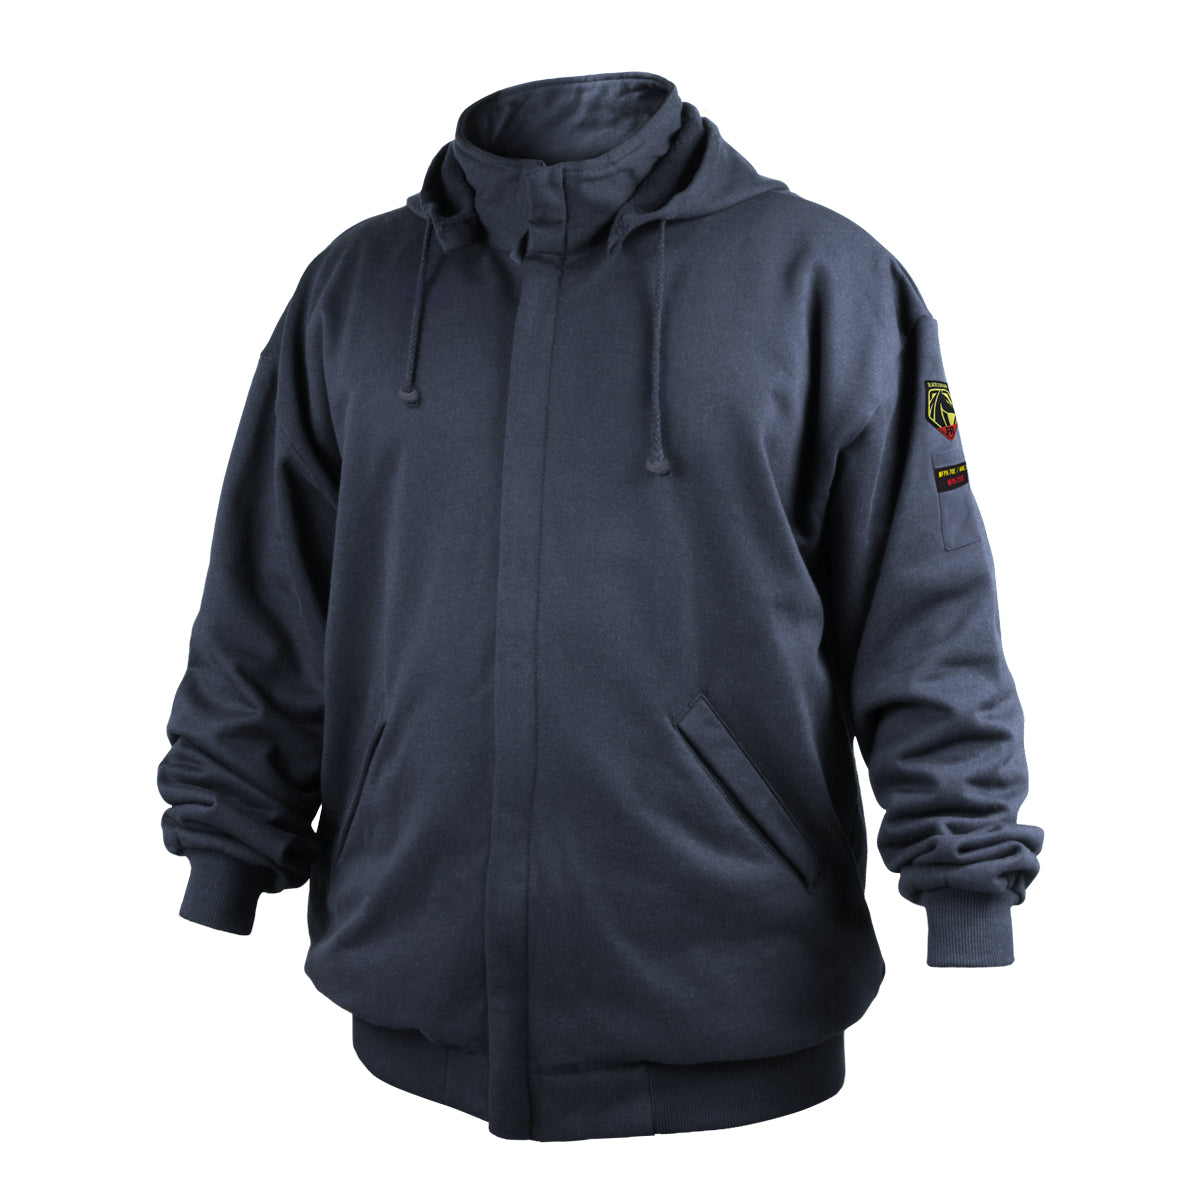 Revco JF3530-NV AR/FR Cotton Full-Zip Hooded Sweatshirt